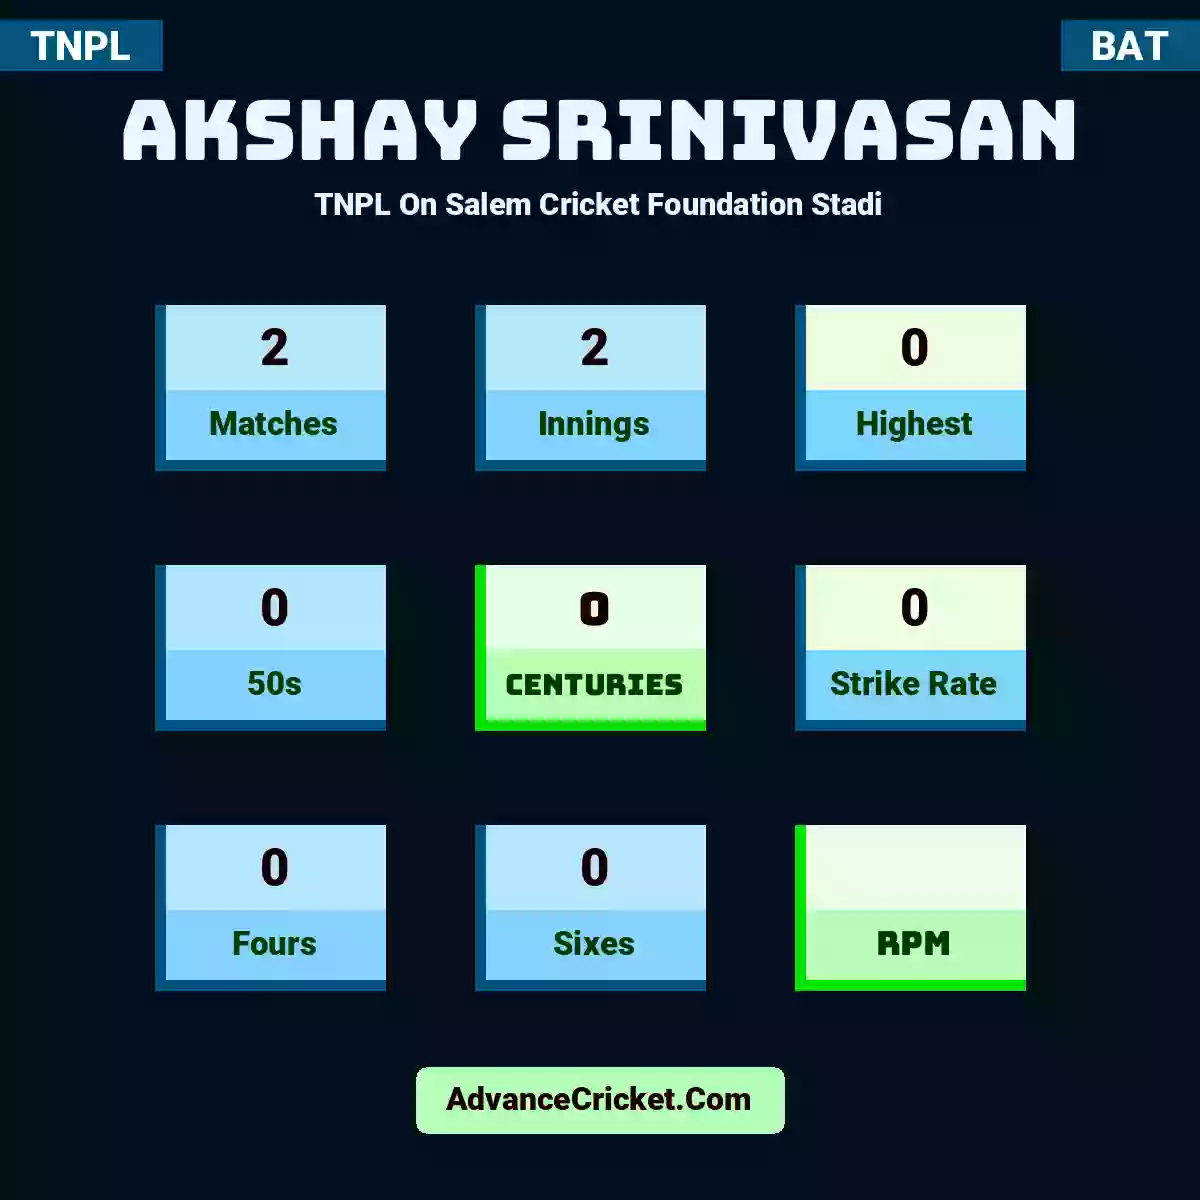 Akshay Srinivasan TNPL  On Salem Cricket Foundation Stadi, Akshay Srinivasan played 2 matches, scored 0 runs as highest, 0 half-centuries, and 0 centuries, with a strike rate of 0. A.Srinivasan hit 0 fours and 0 sixes.